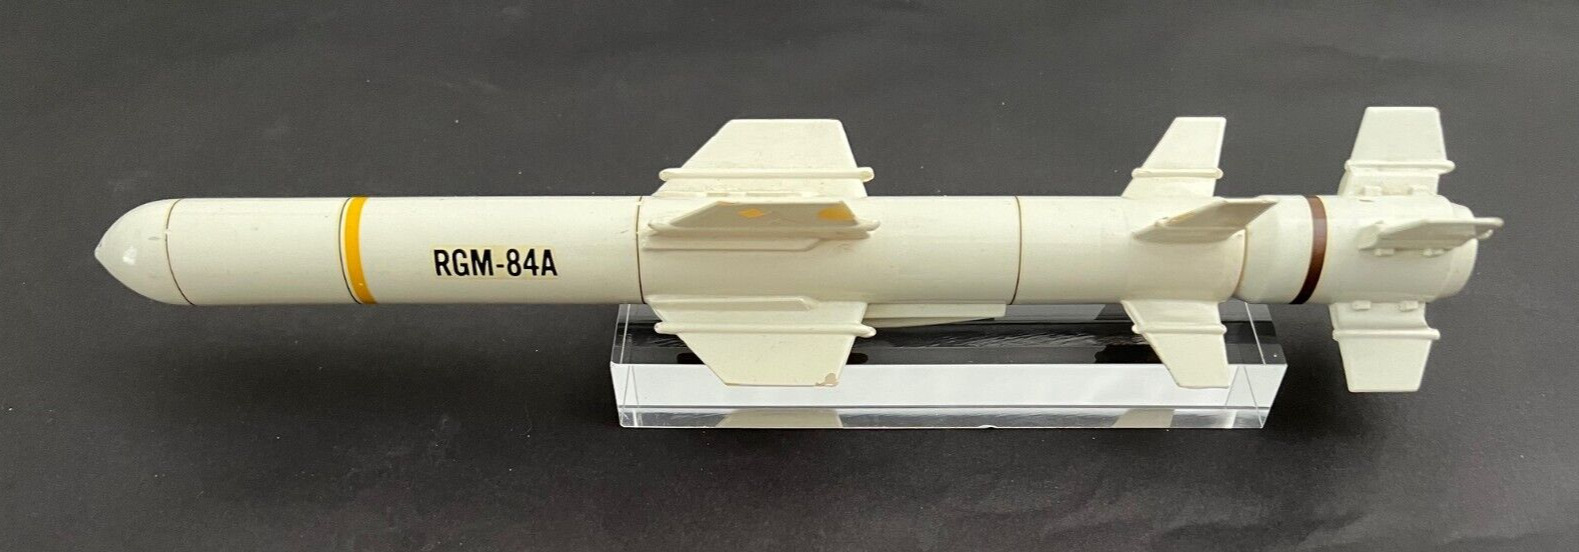 US Navy Harpoon Missile RGM-84A Desk 12